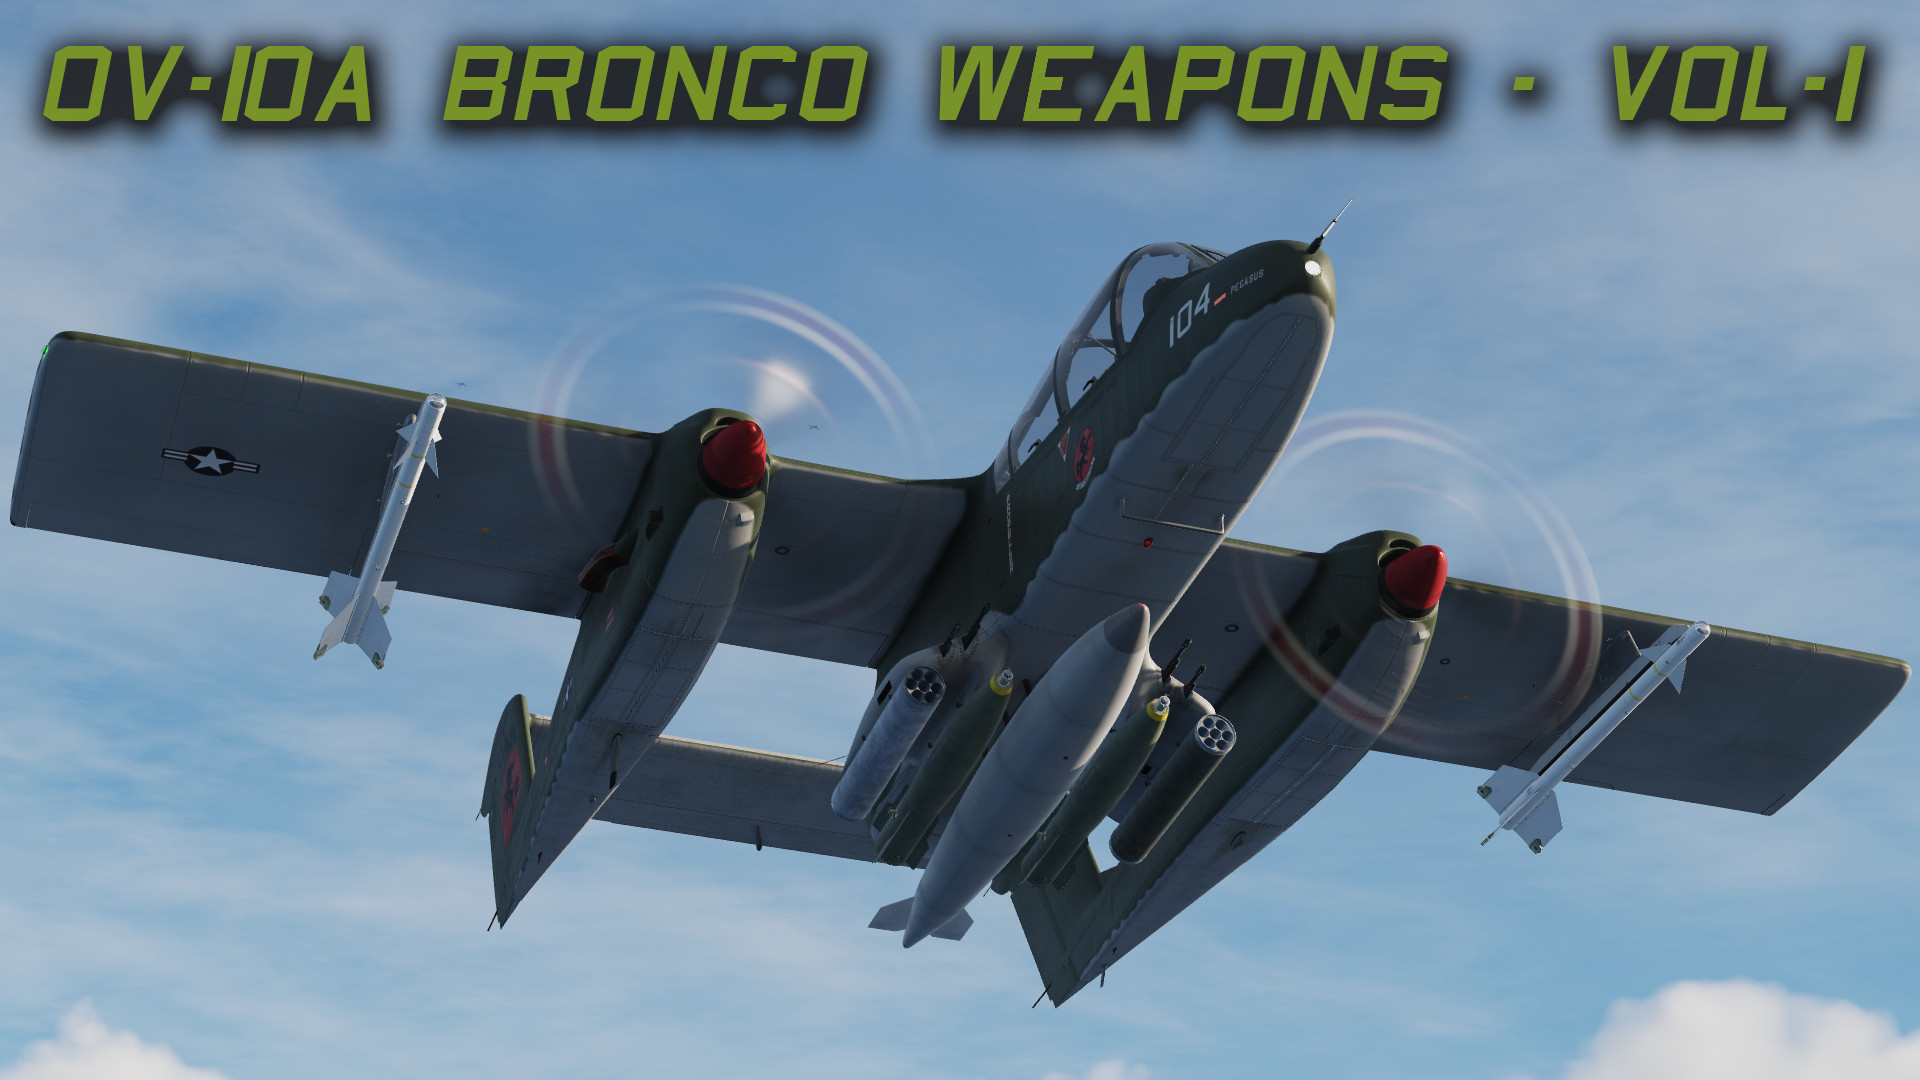 OV-10A Bronco Mod - Weapons Loadout  - Vol 1